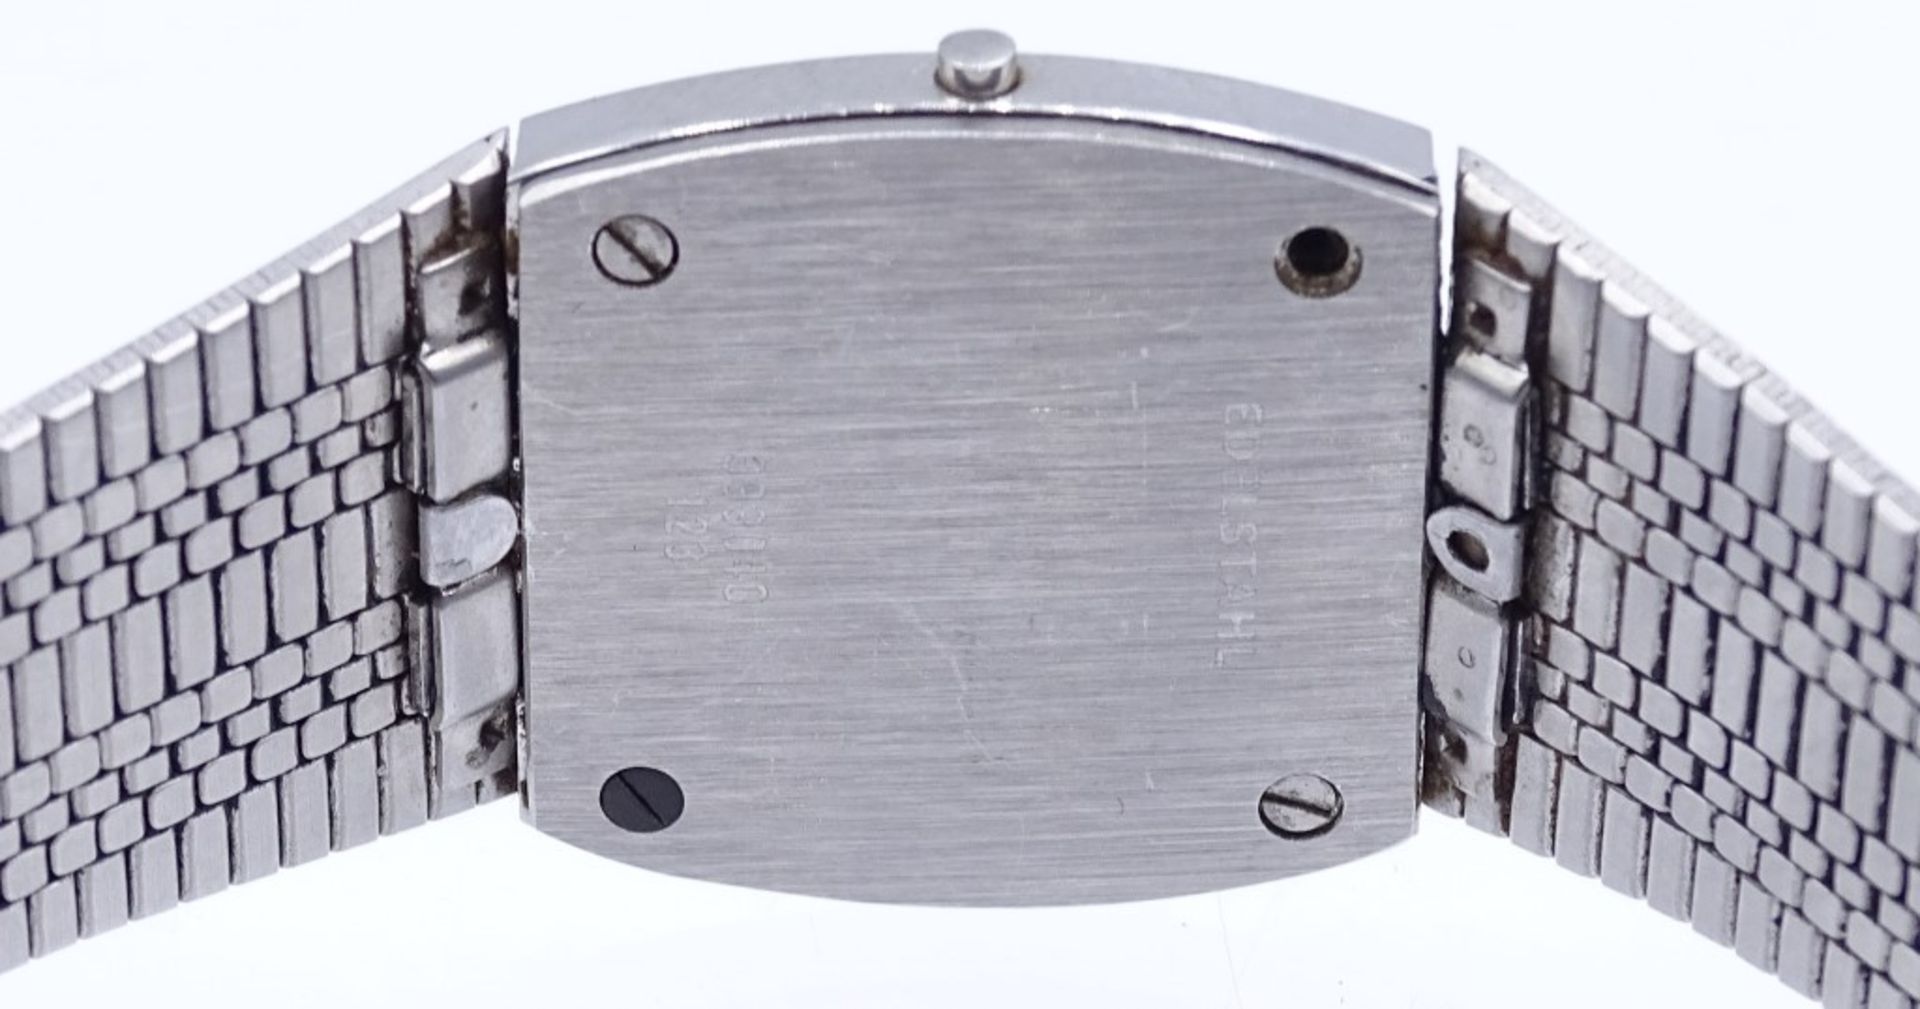 Armbanduhr "Dugena";Quartz,Edelstahl,Gehäuse 25x23mm, Funktion nicht überprüft - Bild 5 aus 5